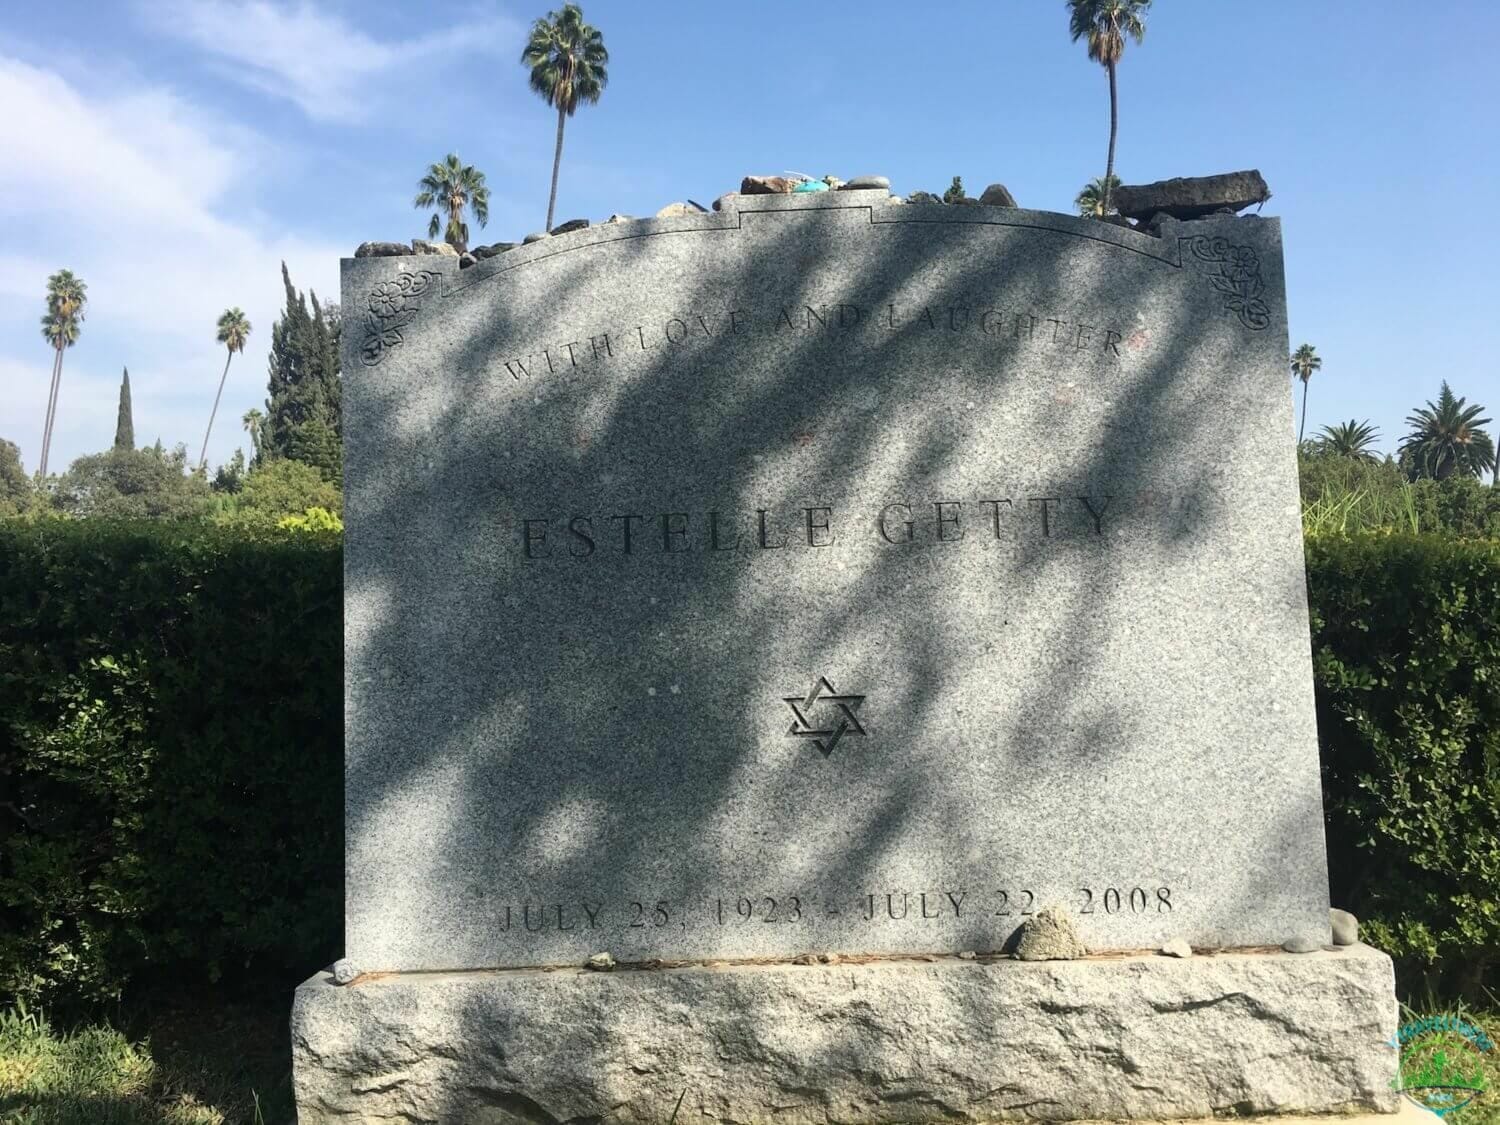 Estelle Getty grave, hollywood Forever Cemetery